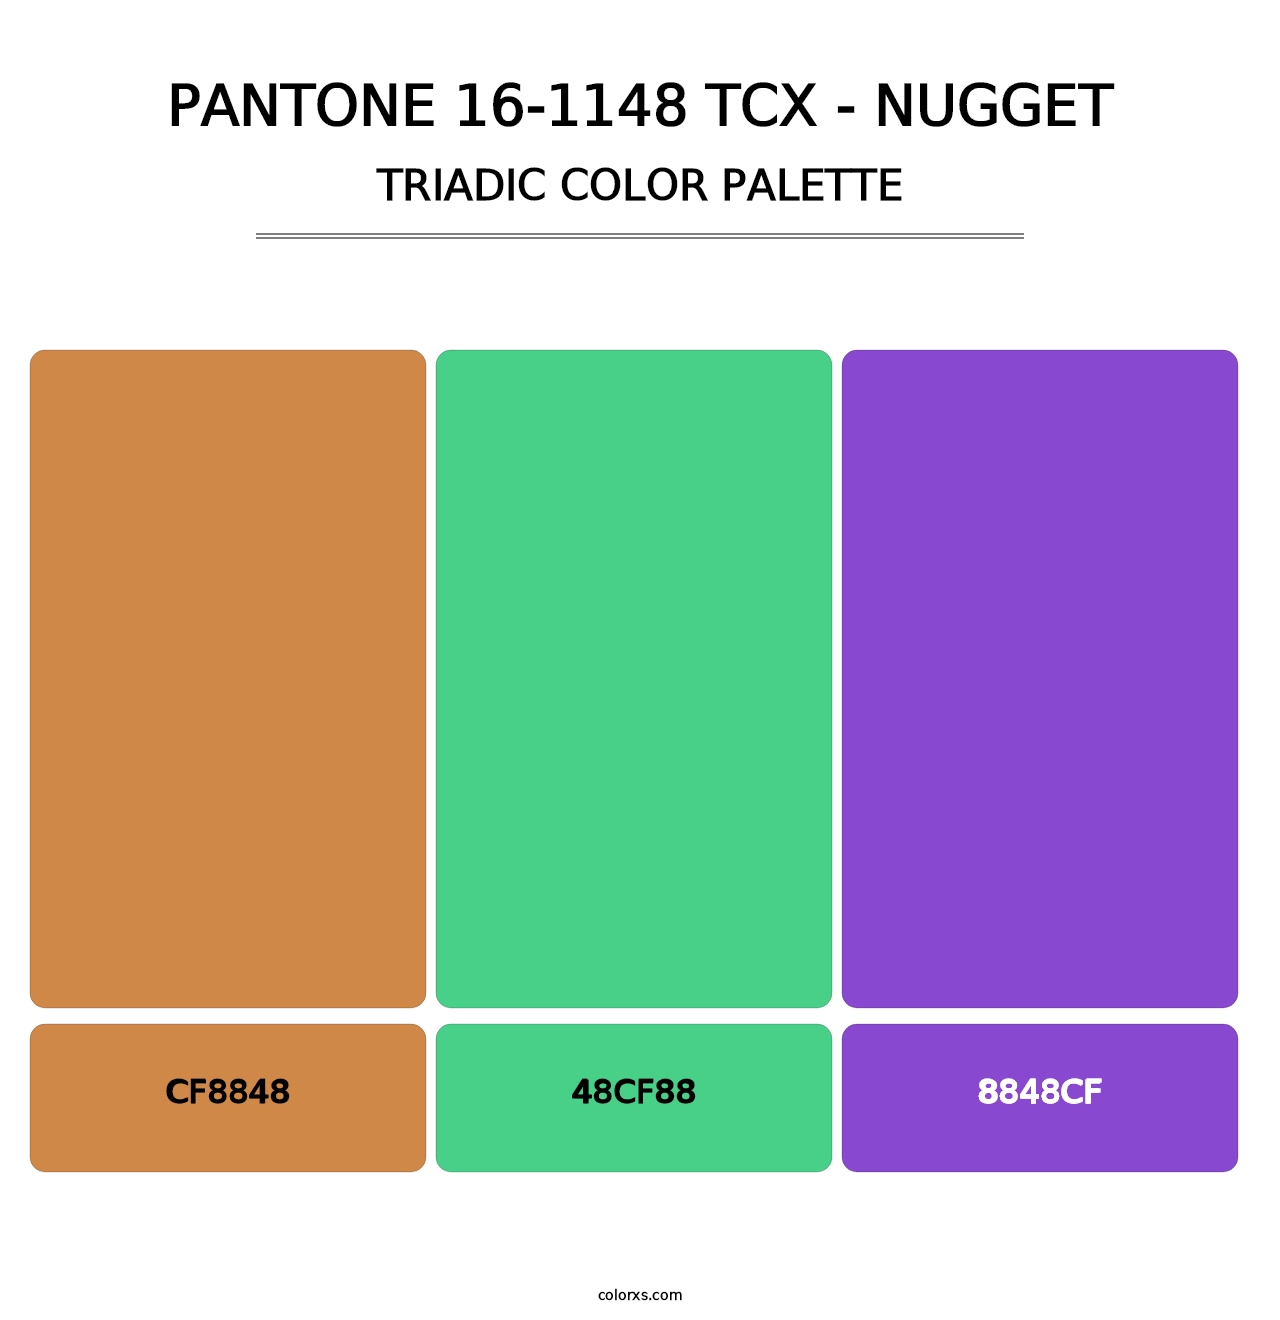 PANTONE 16-1148 TCX - Nugget - Triadic Color Palette